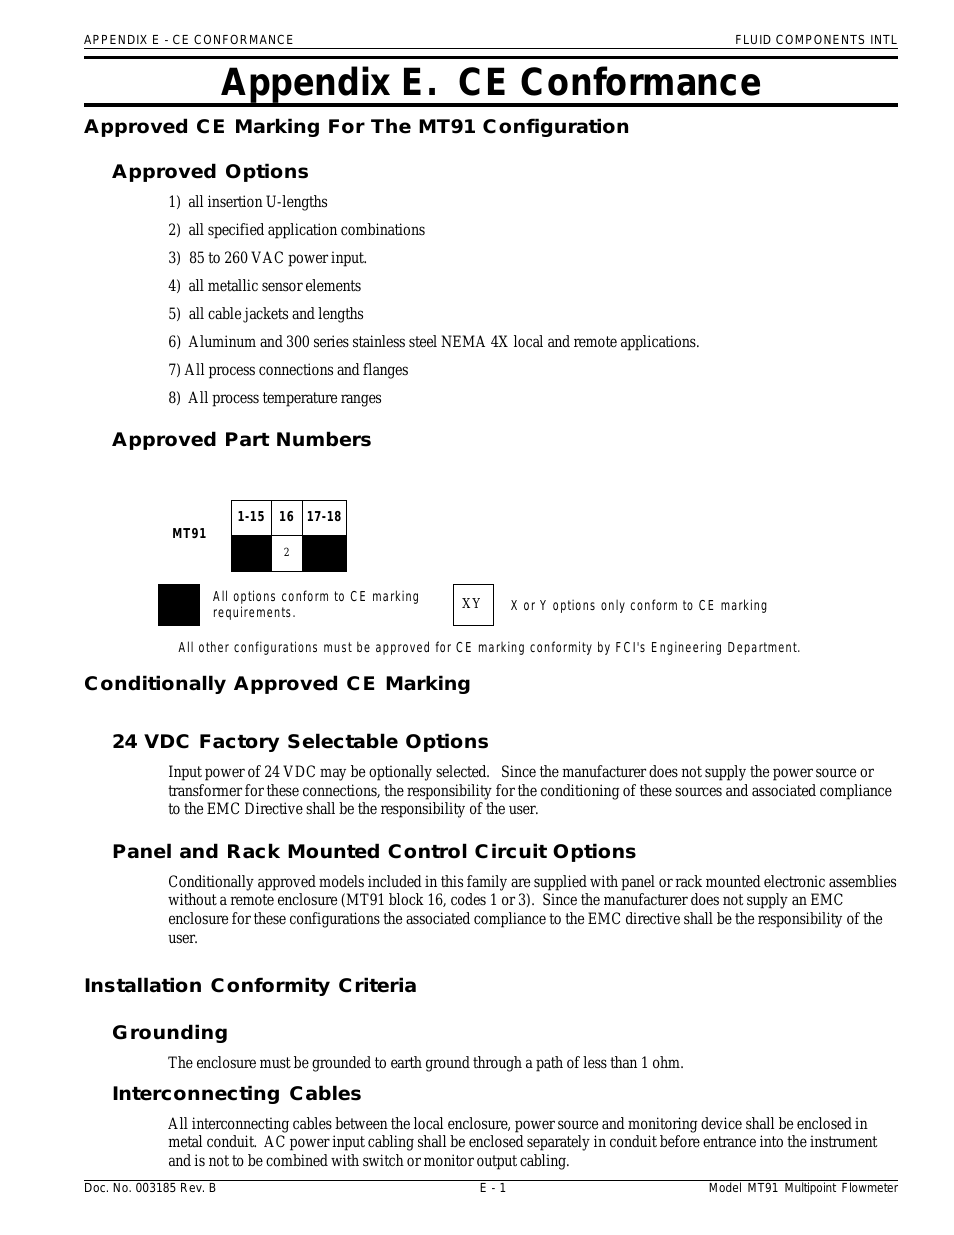 MT91 Manual CE Conformance